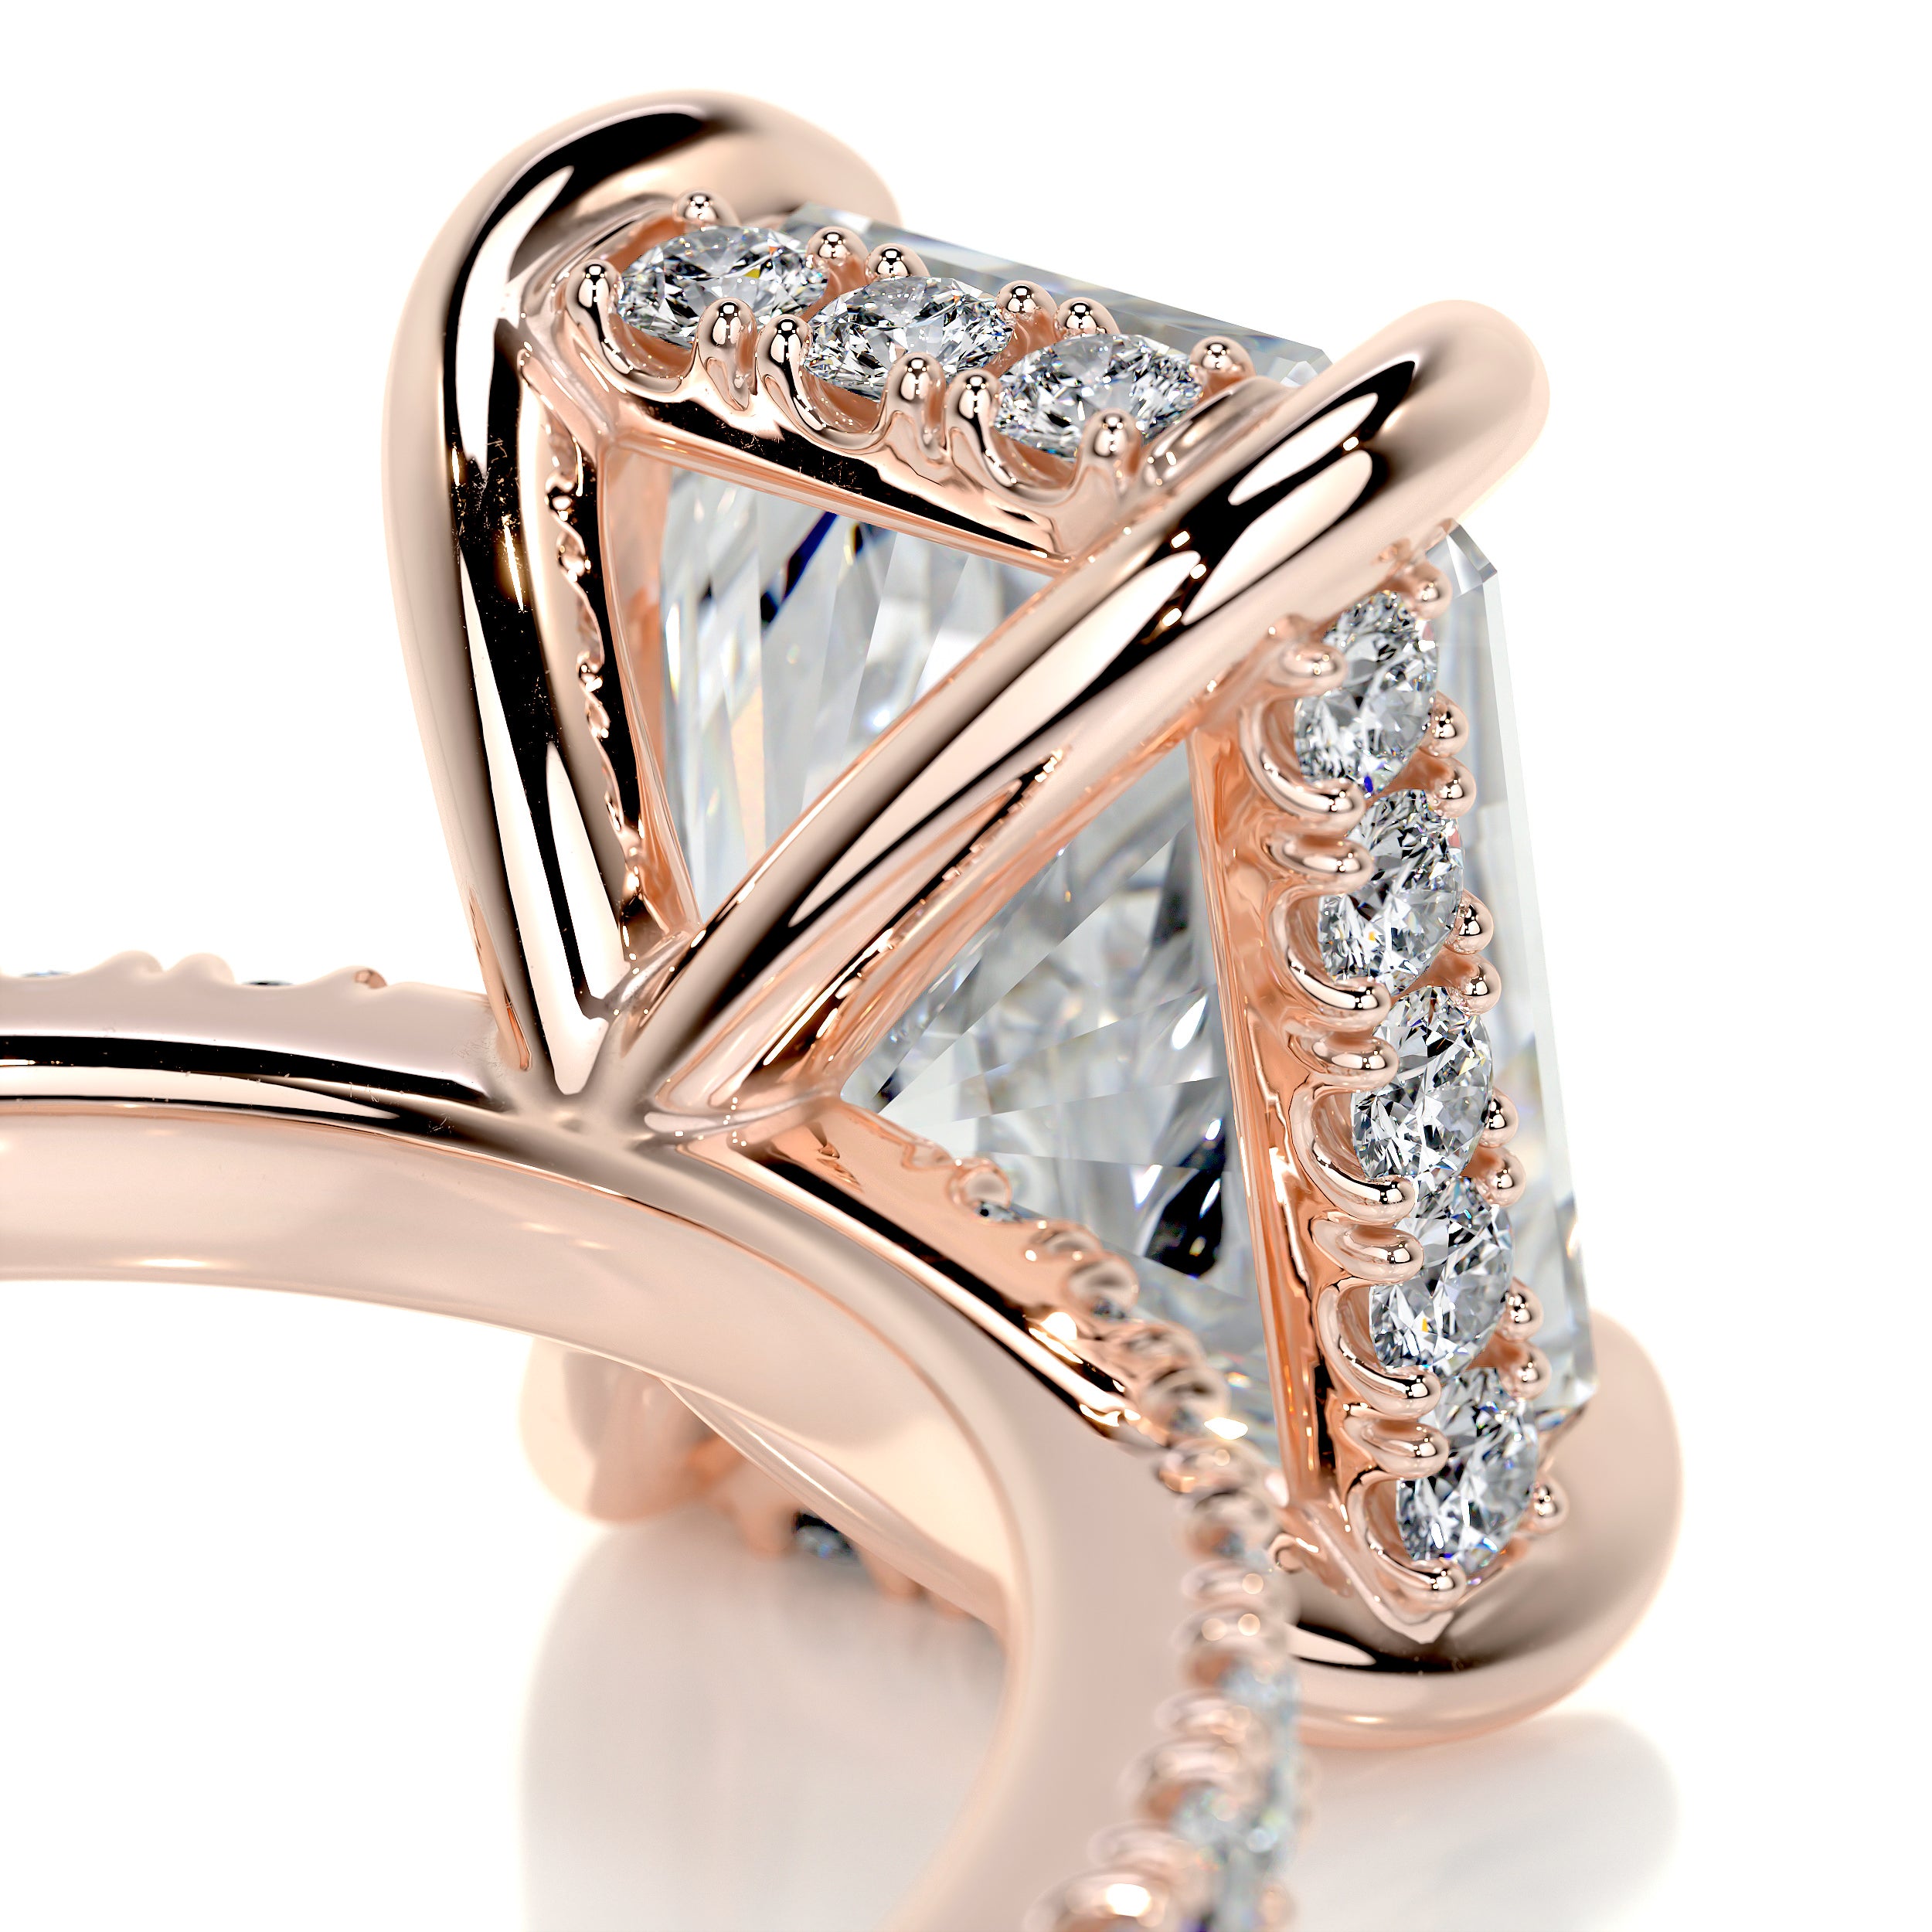 Luna Diamond Engagement Ring -14K Rose Gold